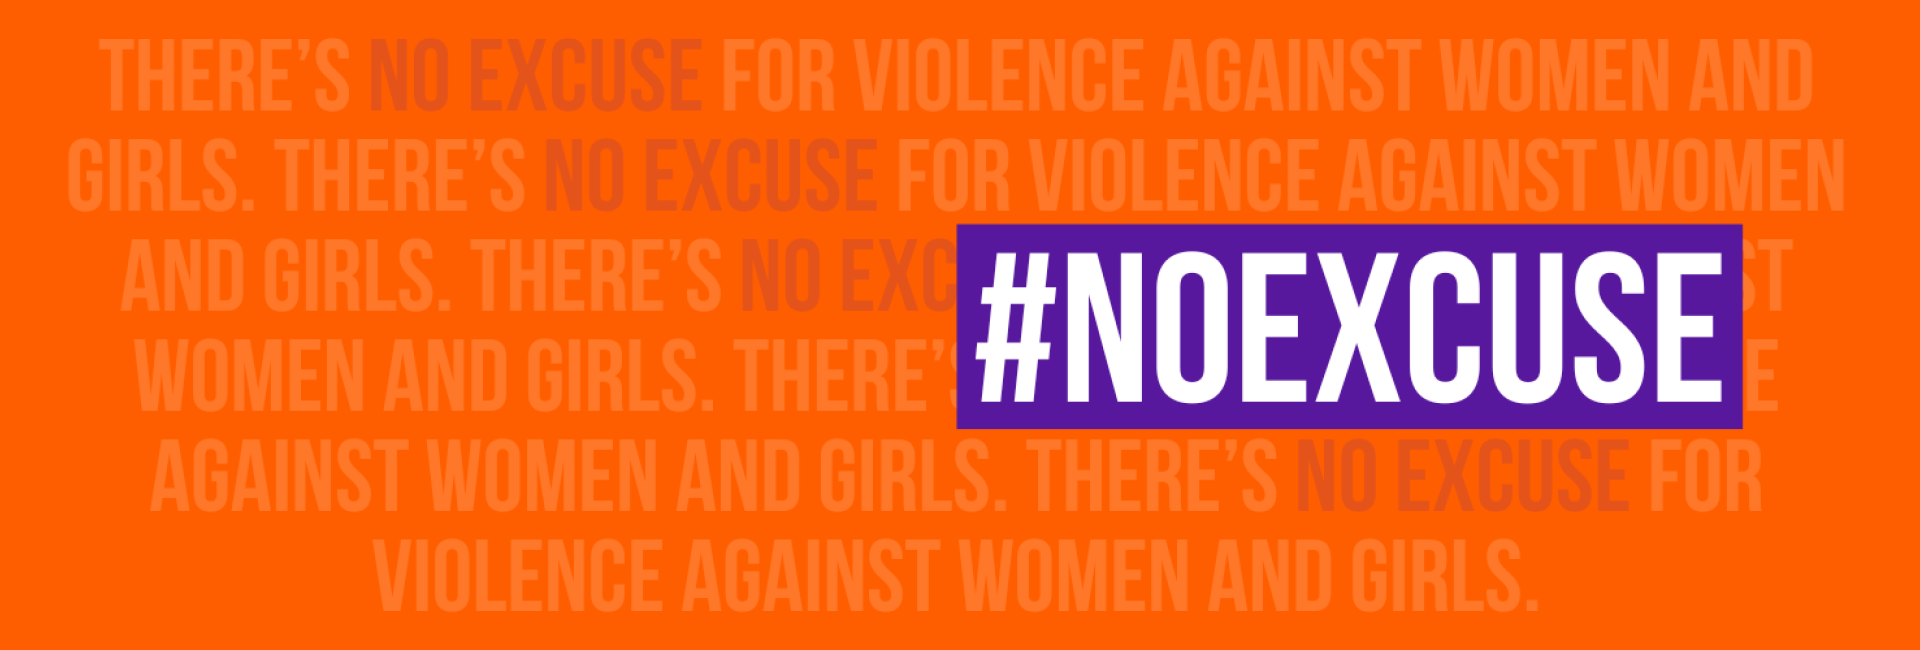 OrangeTheWorld SAY NO TO VIOLENCE AGAINST WOMEN AND GIRLS